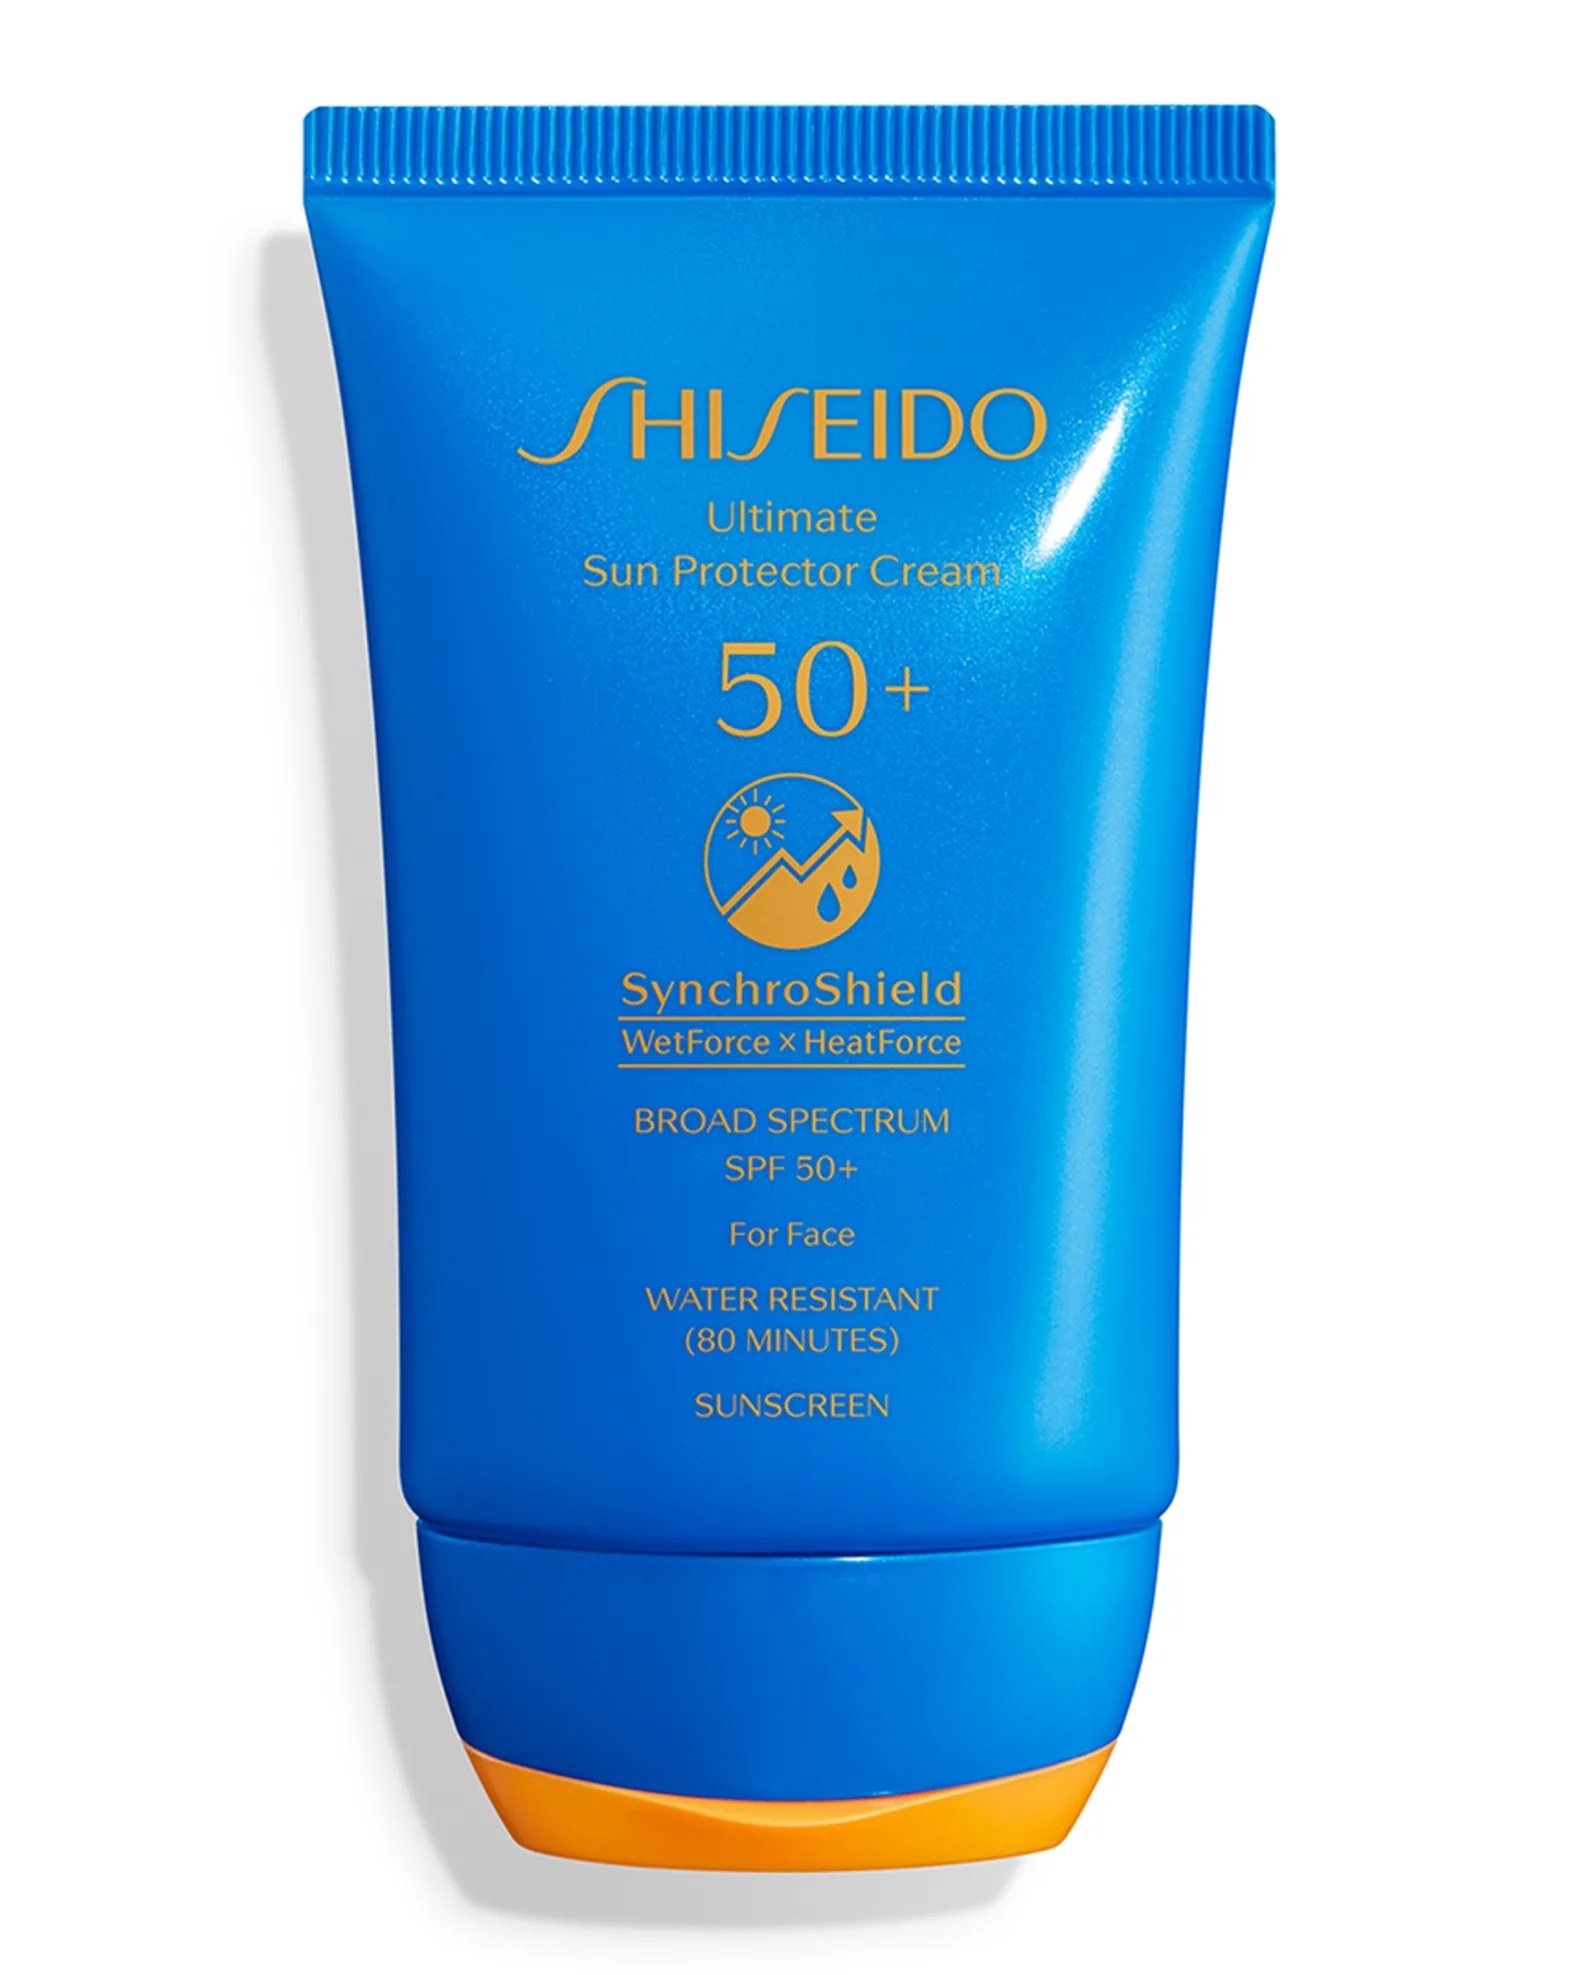 Ultimate Sun Protector Cream SPF 50+ Sunscreen, 1.7 oz.